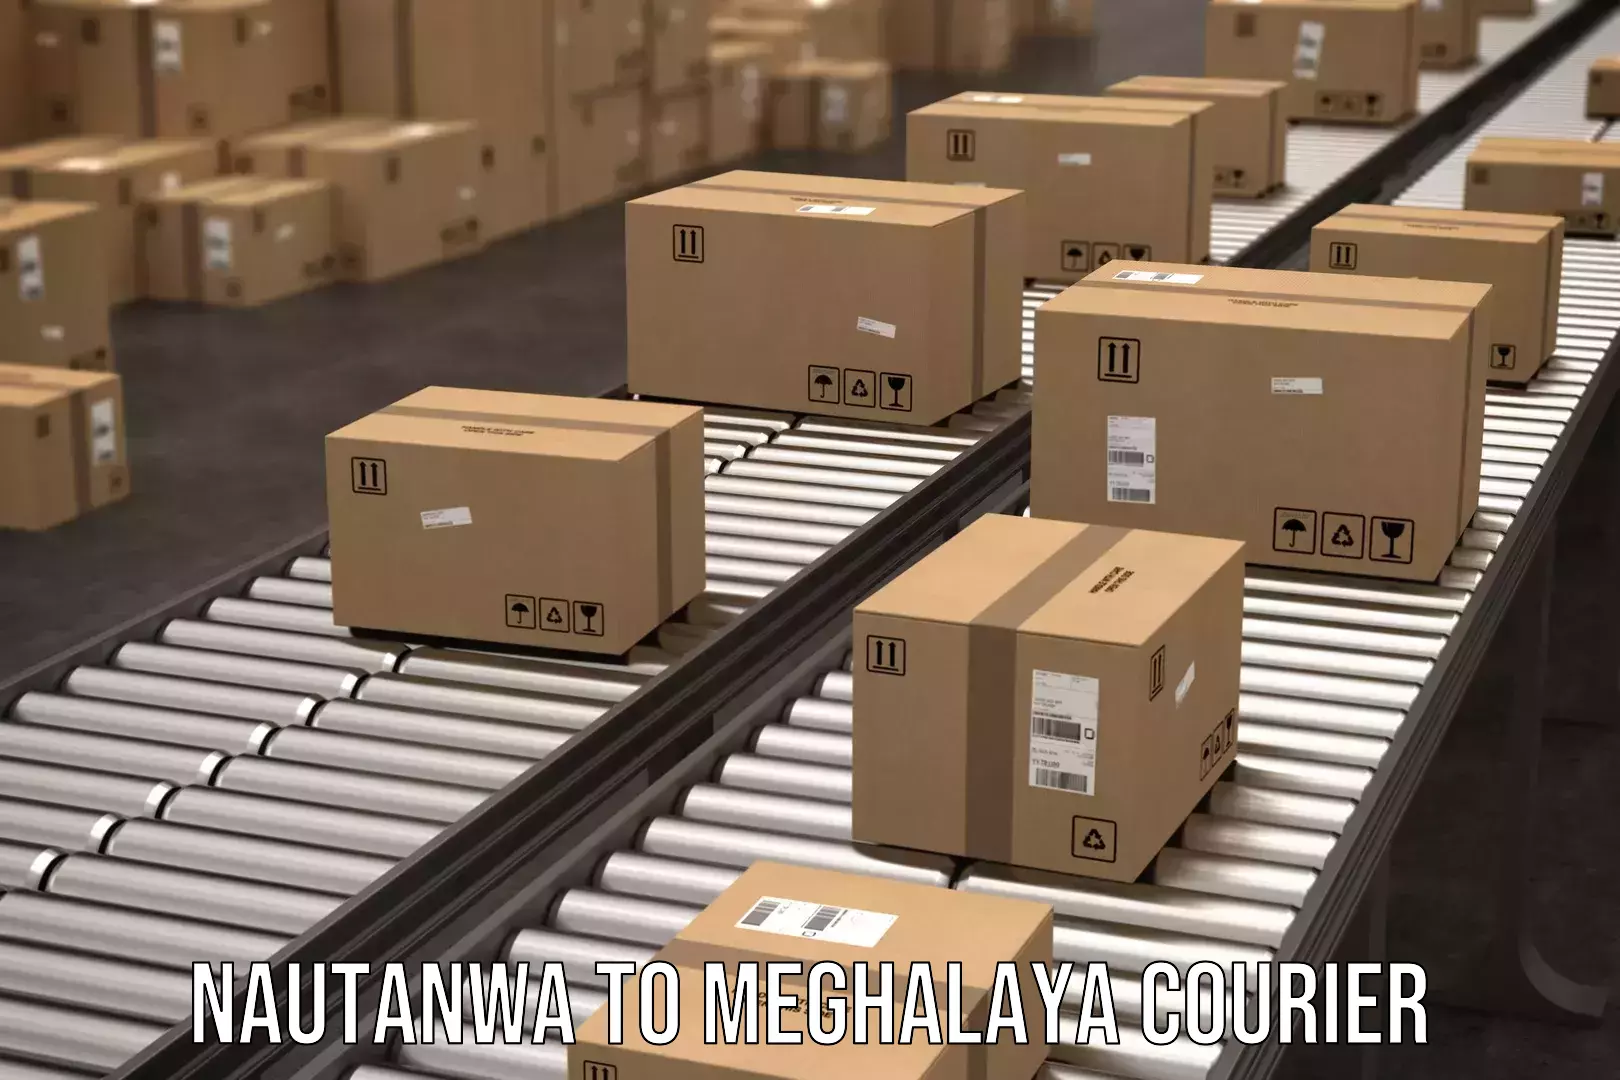 End-to-end delivery Nautanwa to Meghalaya